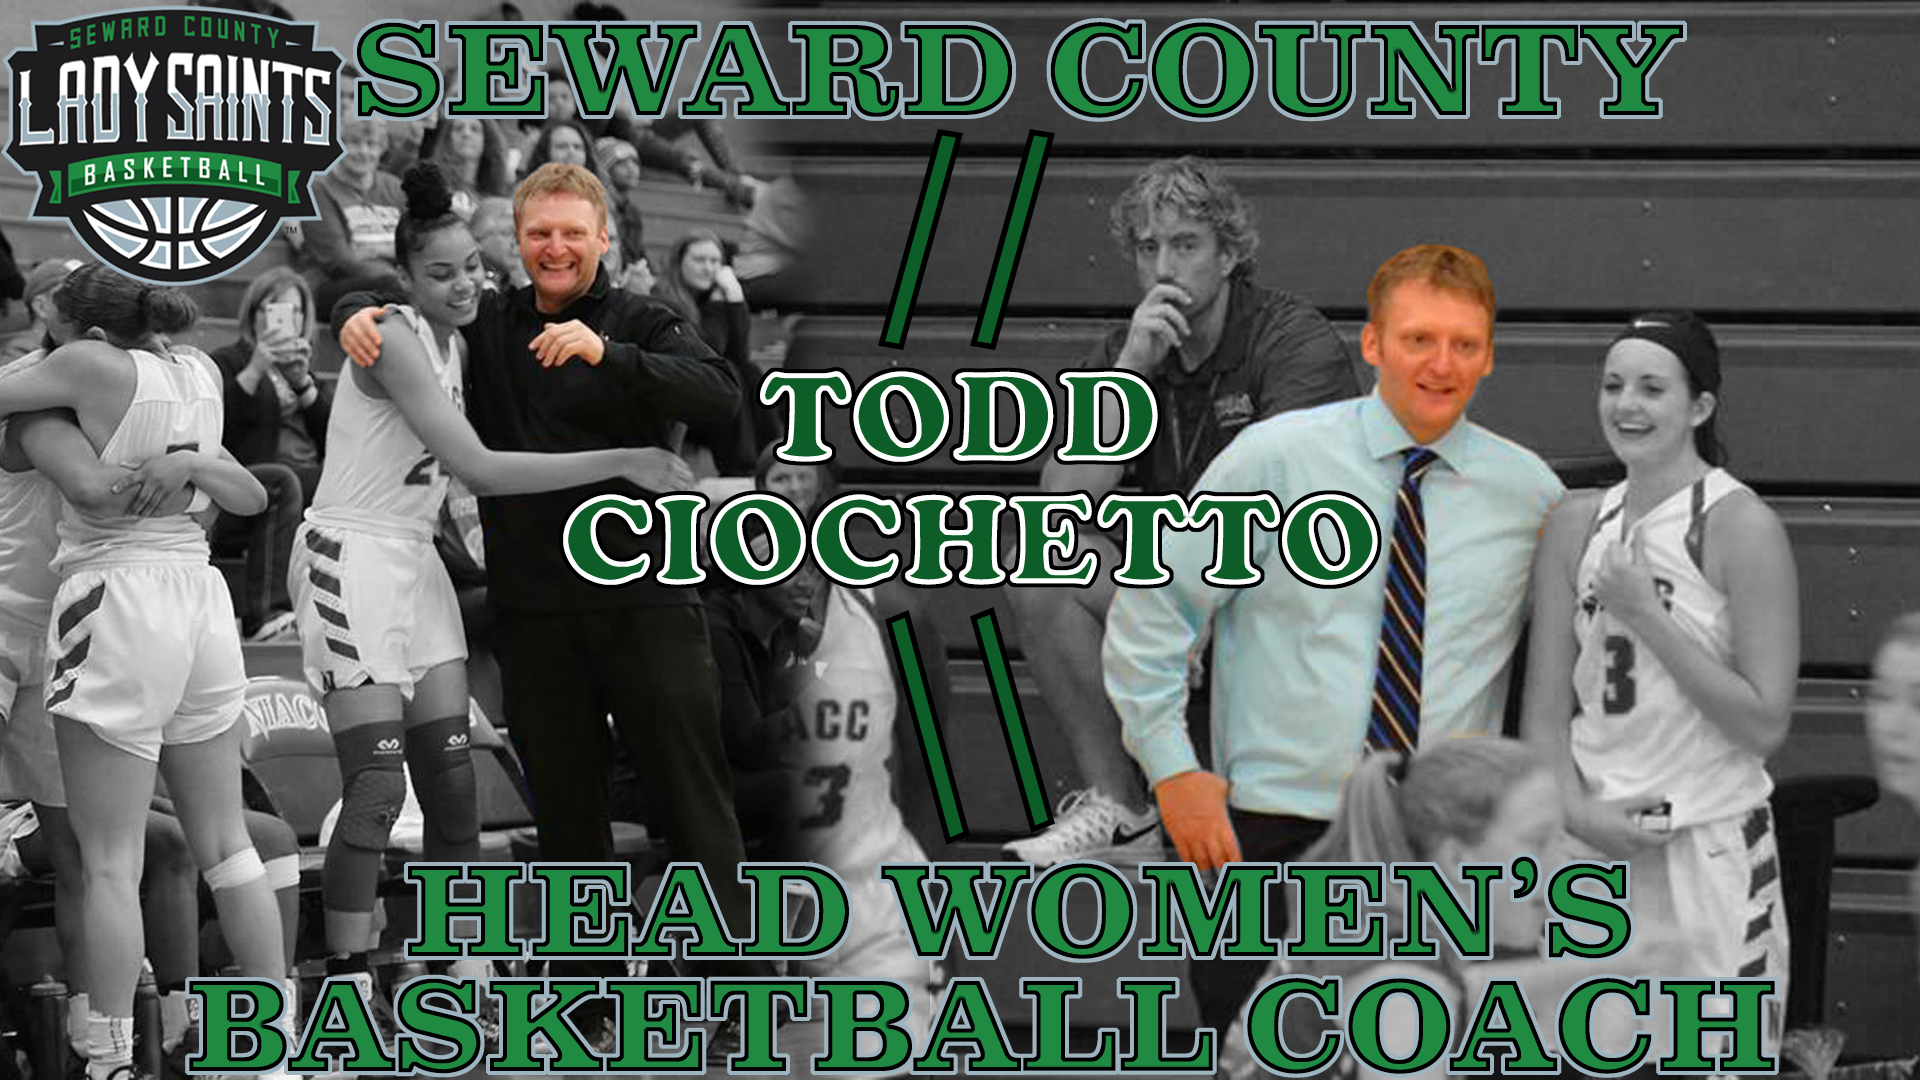 Lady Saints hire NJCAA Coach of the Year Todd Ciochetto to lead Women's Basketball Program.